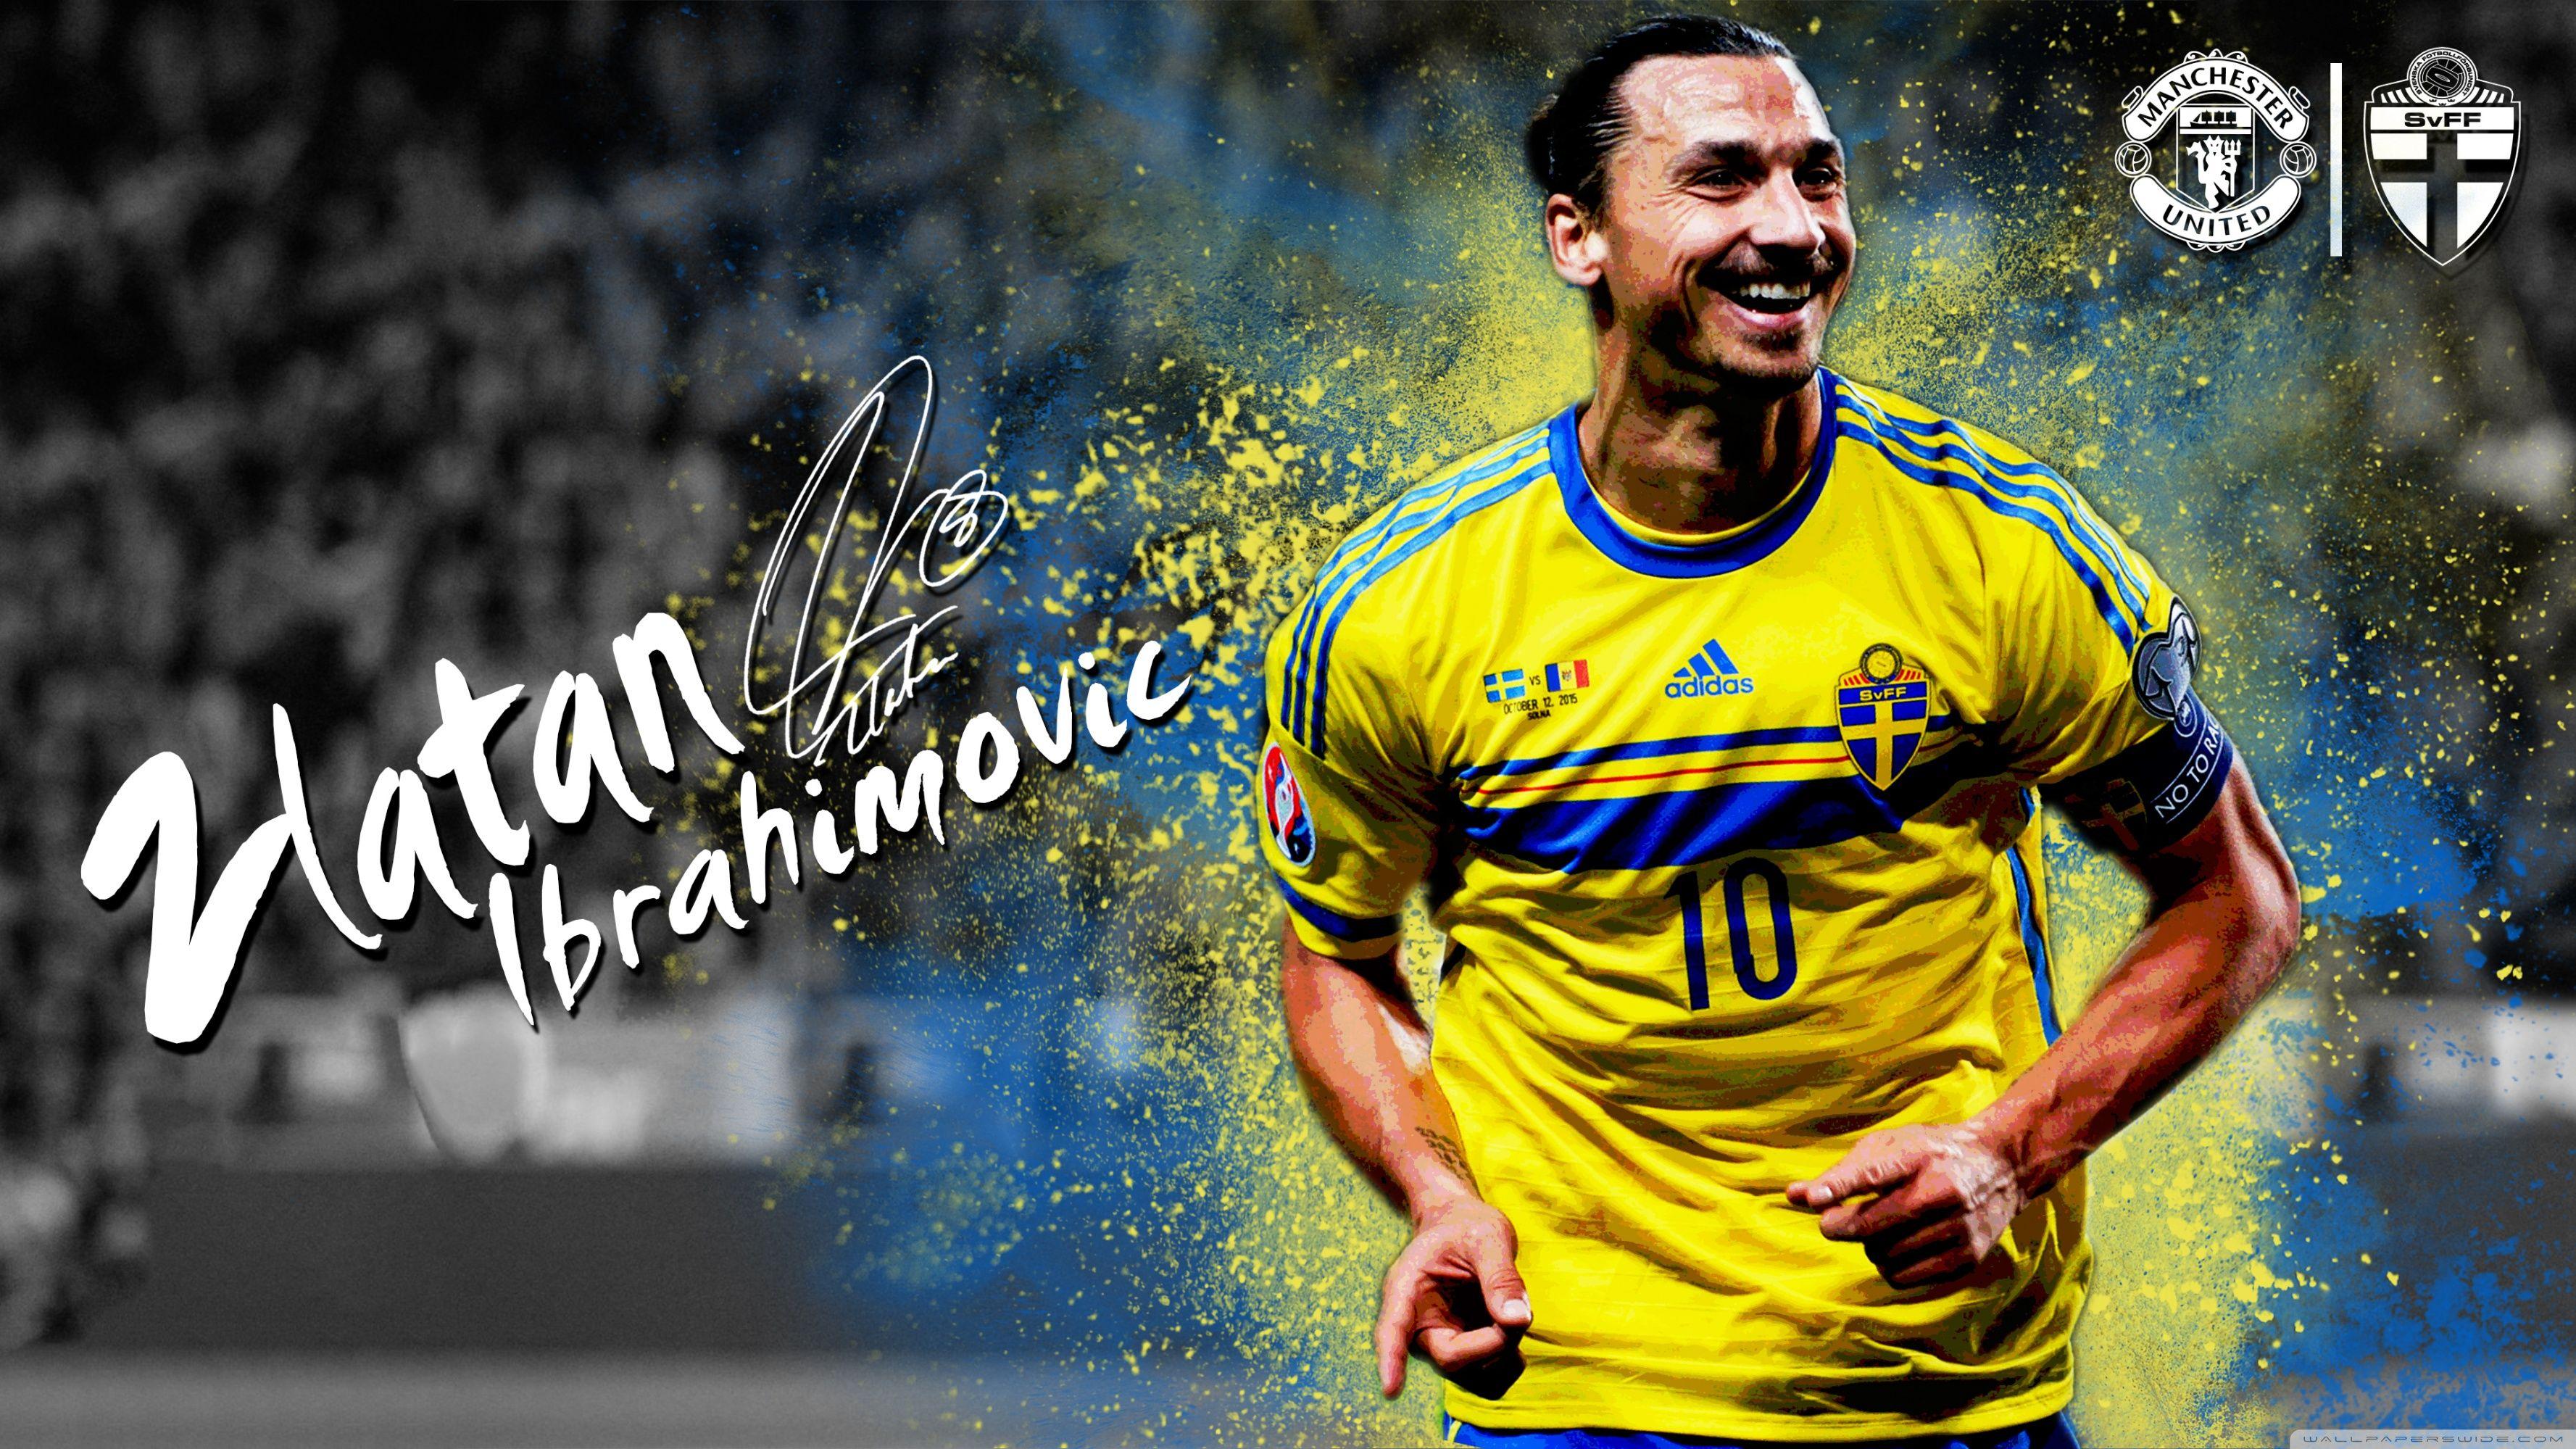 Zlatan Ibrahimovic Wallpapers - Top Free Zlatan Ibrahimovic Backgrounds ...